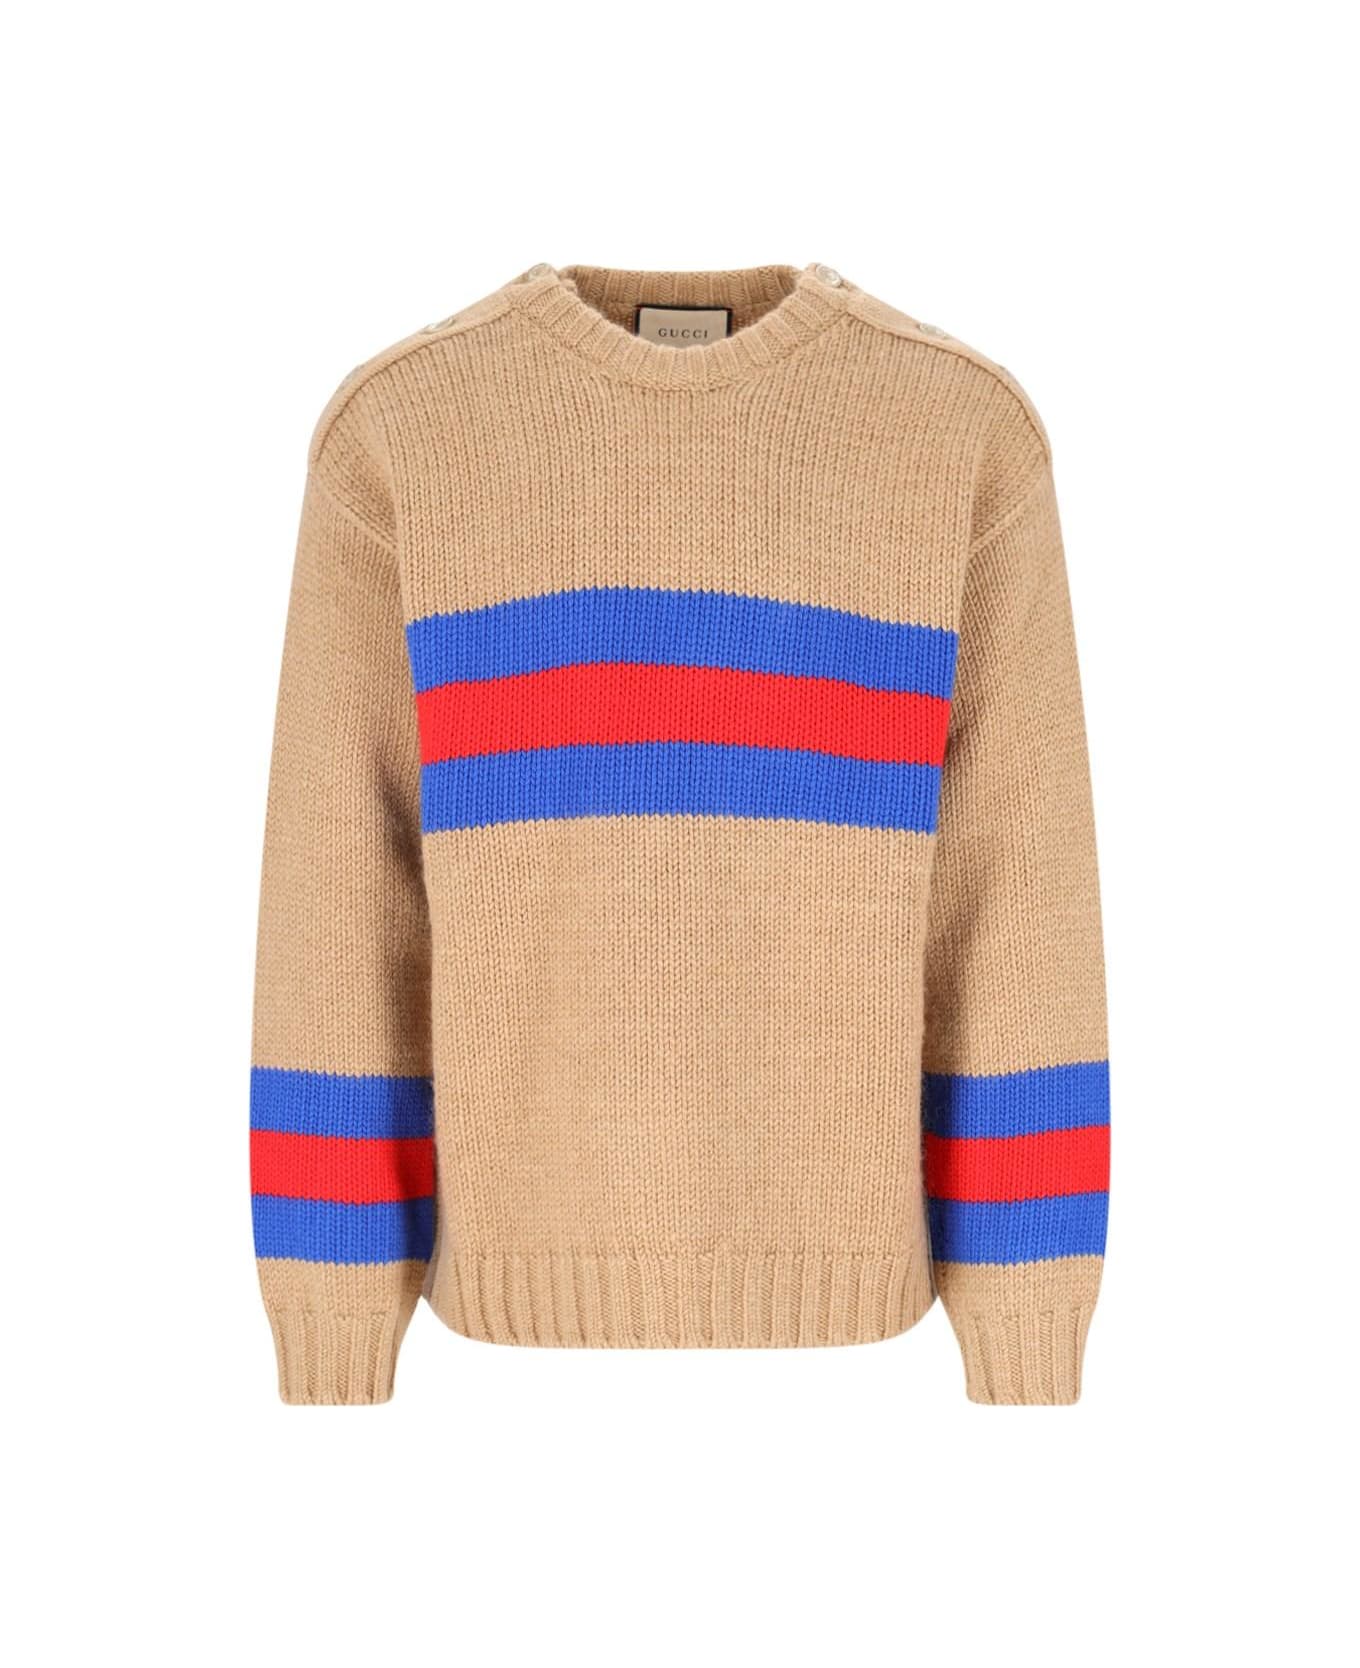 Gucci Wool Sweater - Camel